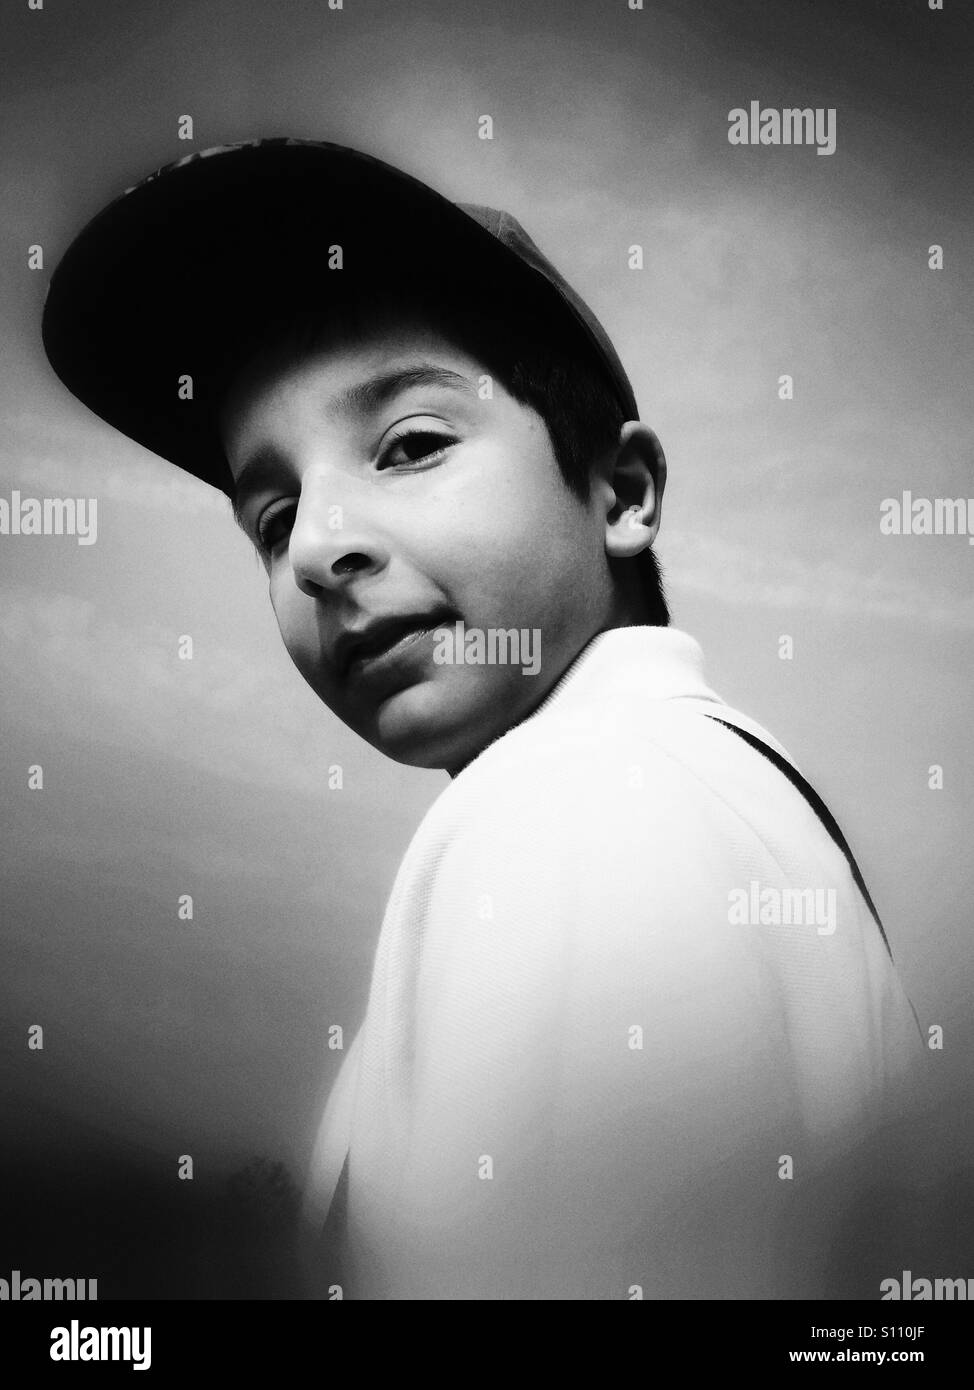 Junge im Baseball-cap Stockfoto